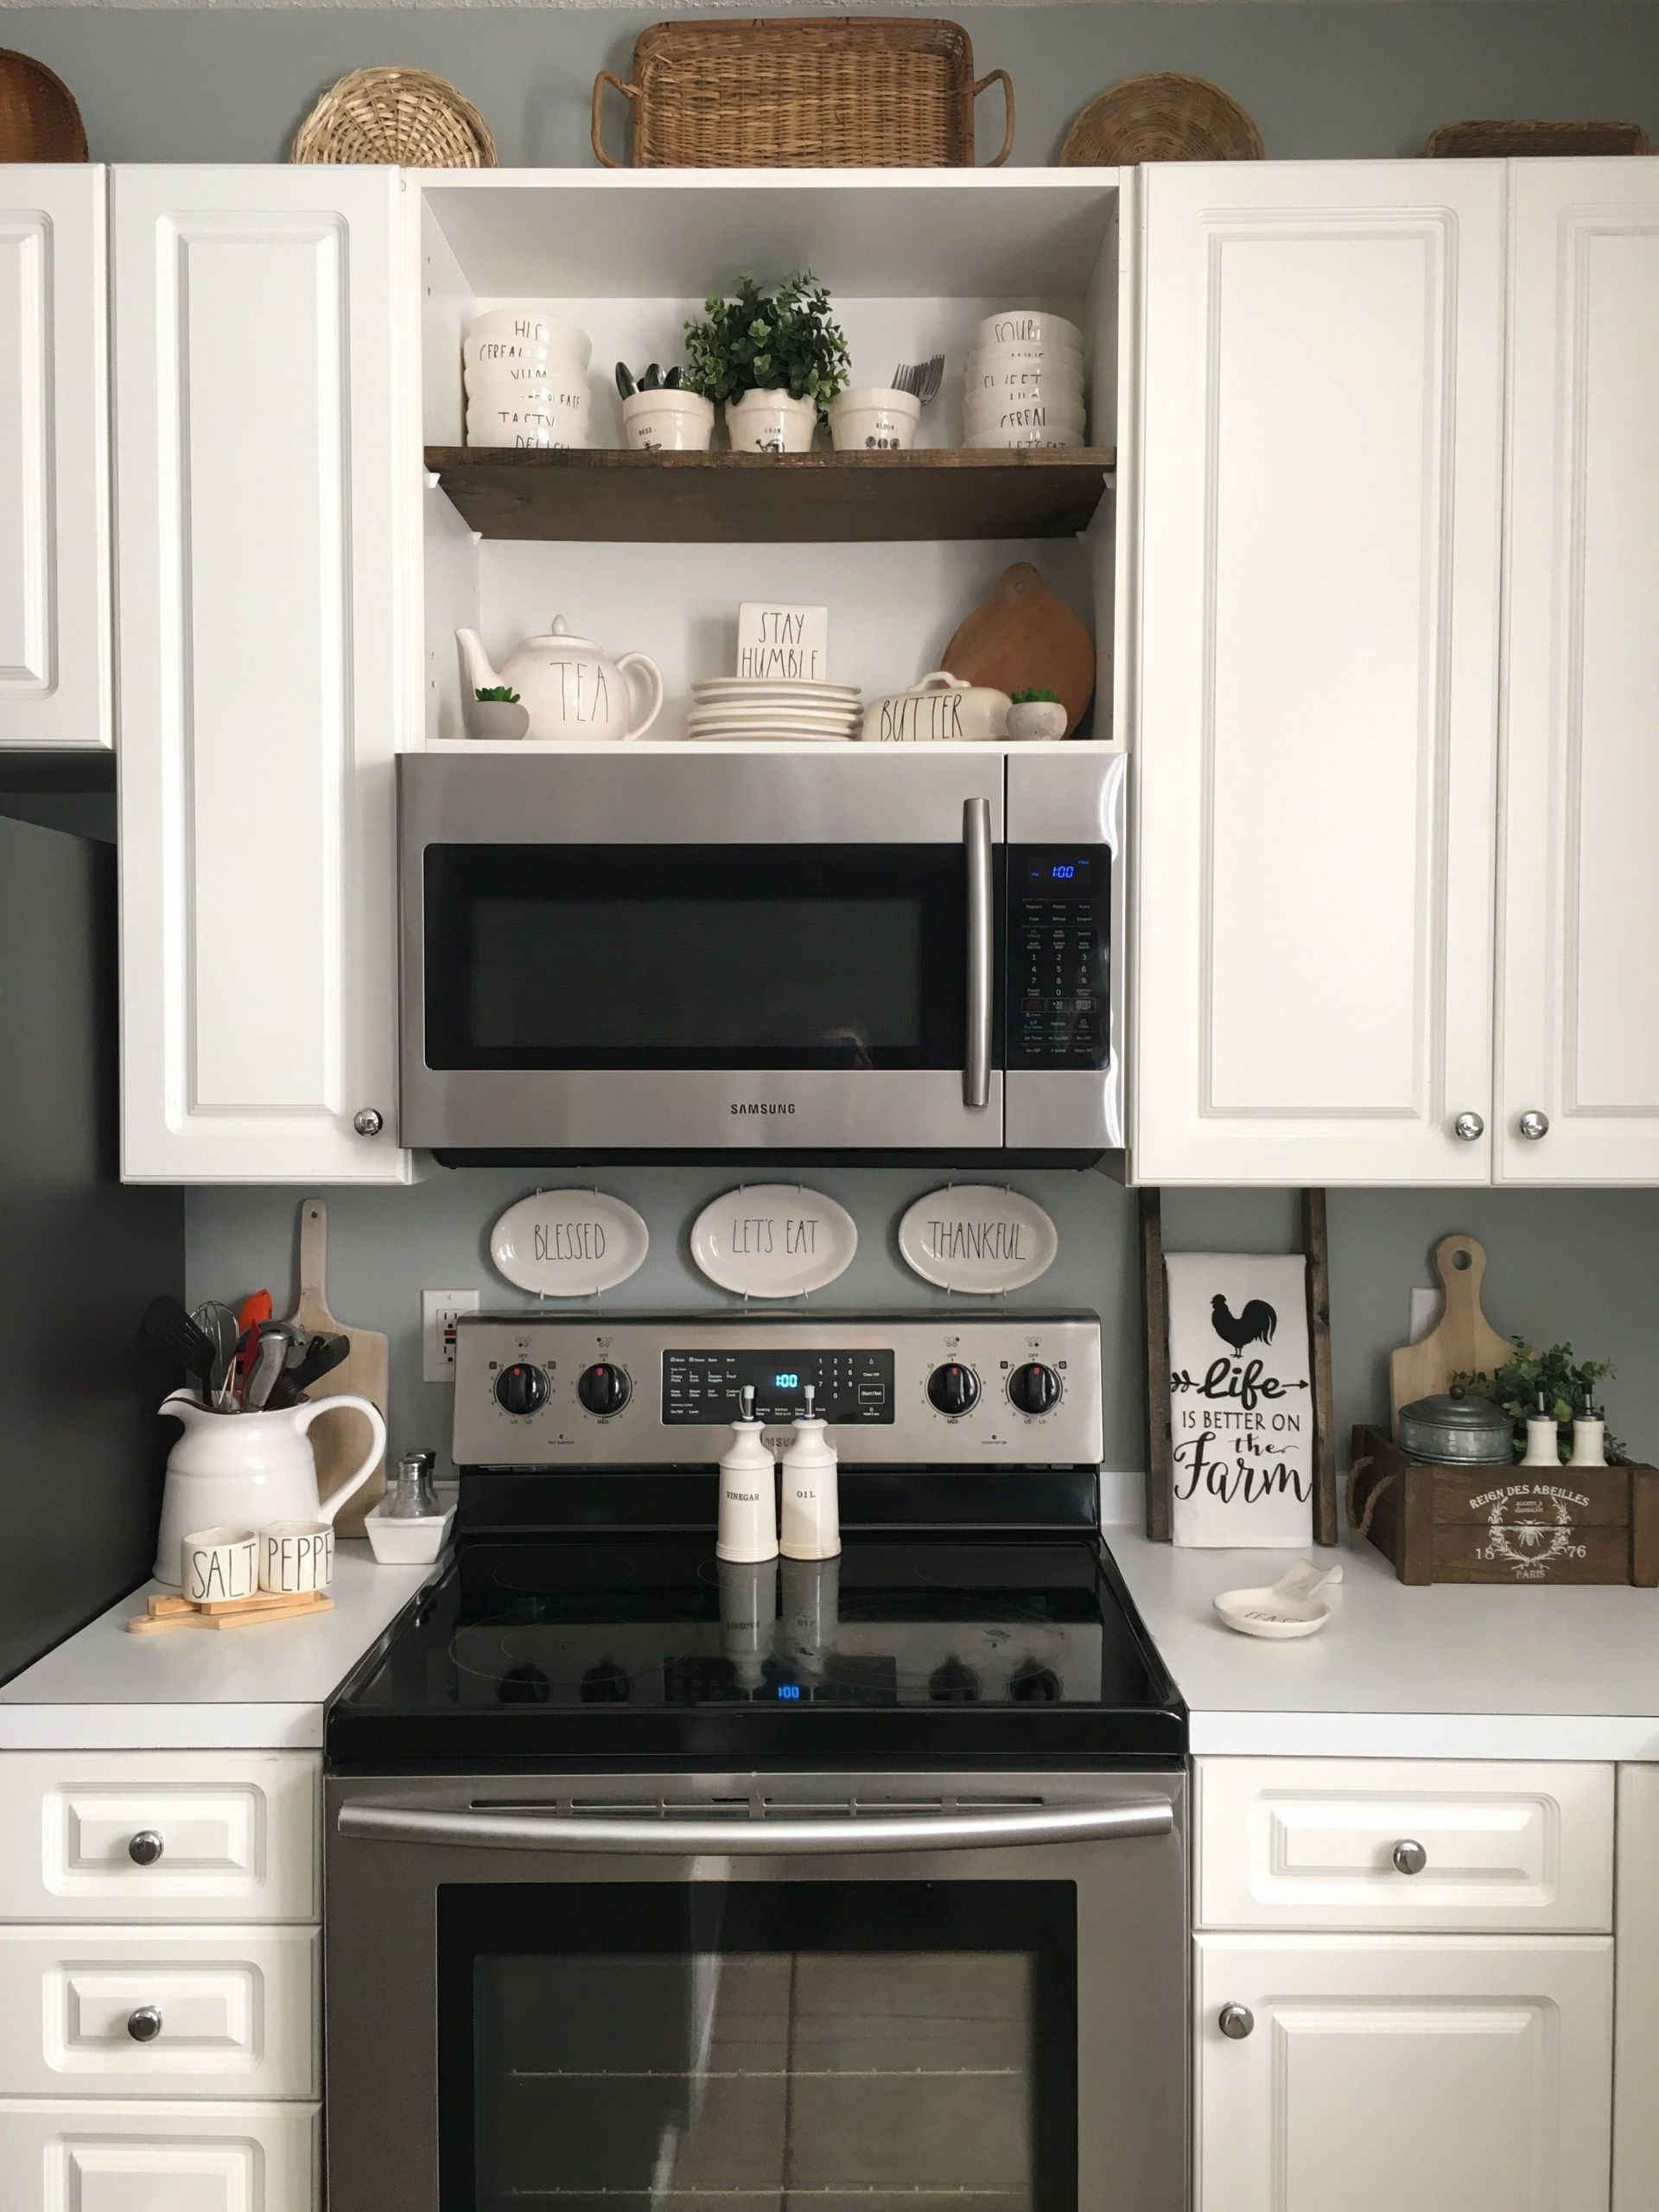 Kitchen Cabinet With Microwave Shelf
 New Microwave Shelf Cabinet